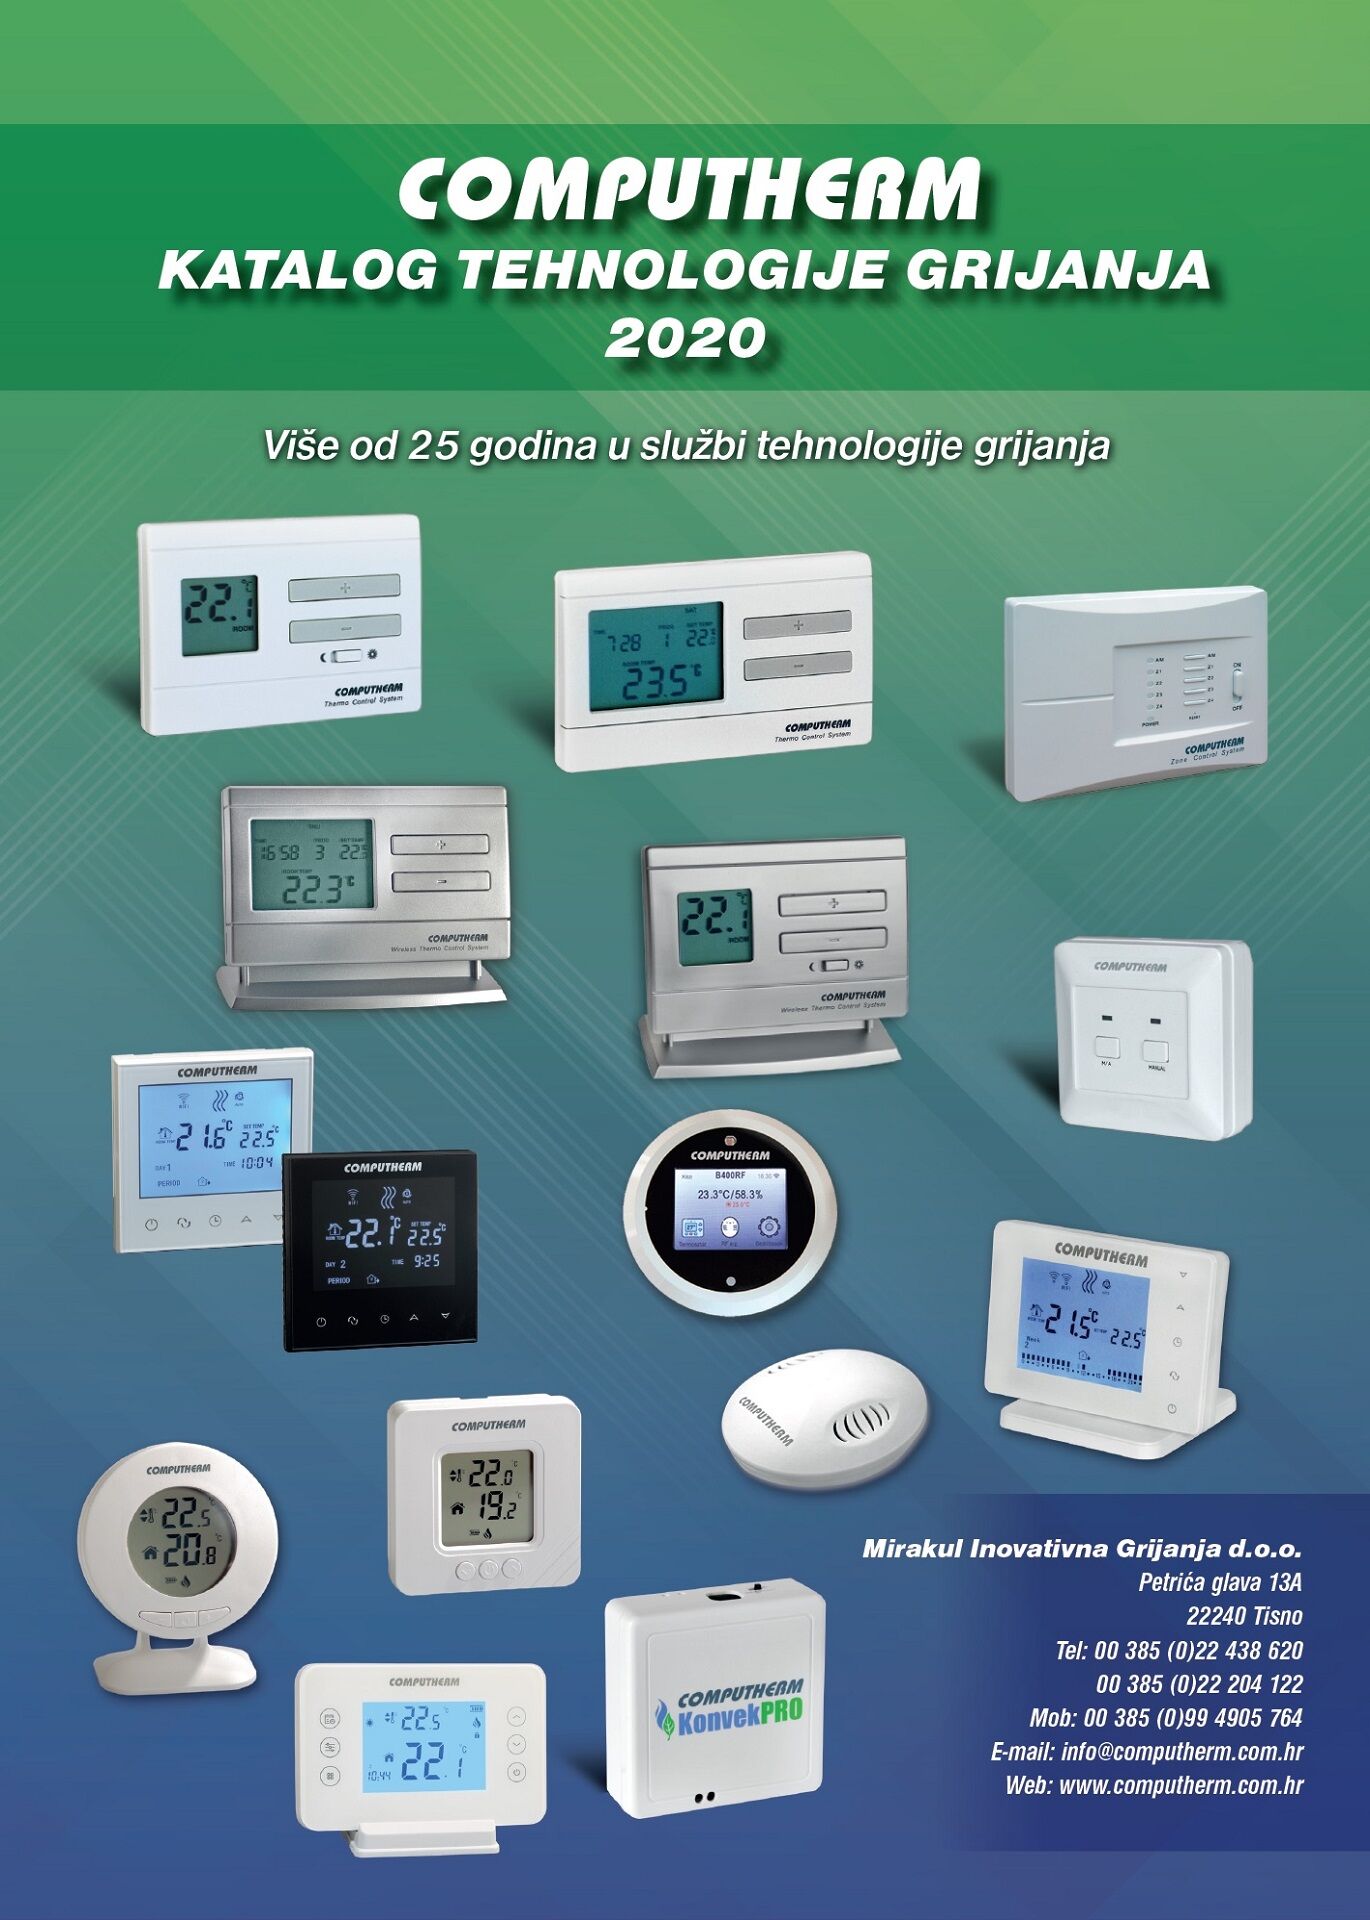 Katalog Computherm proizvoda za 2021 g.